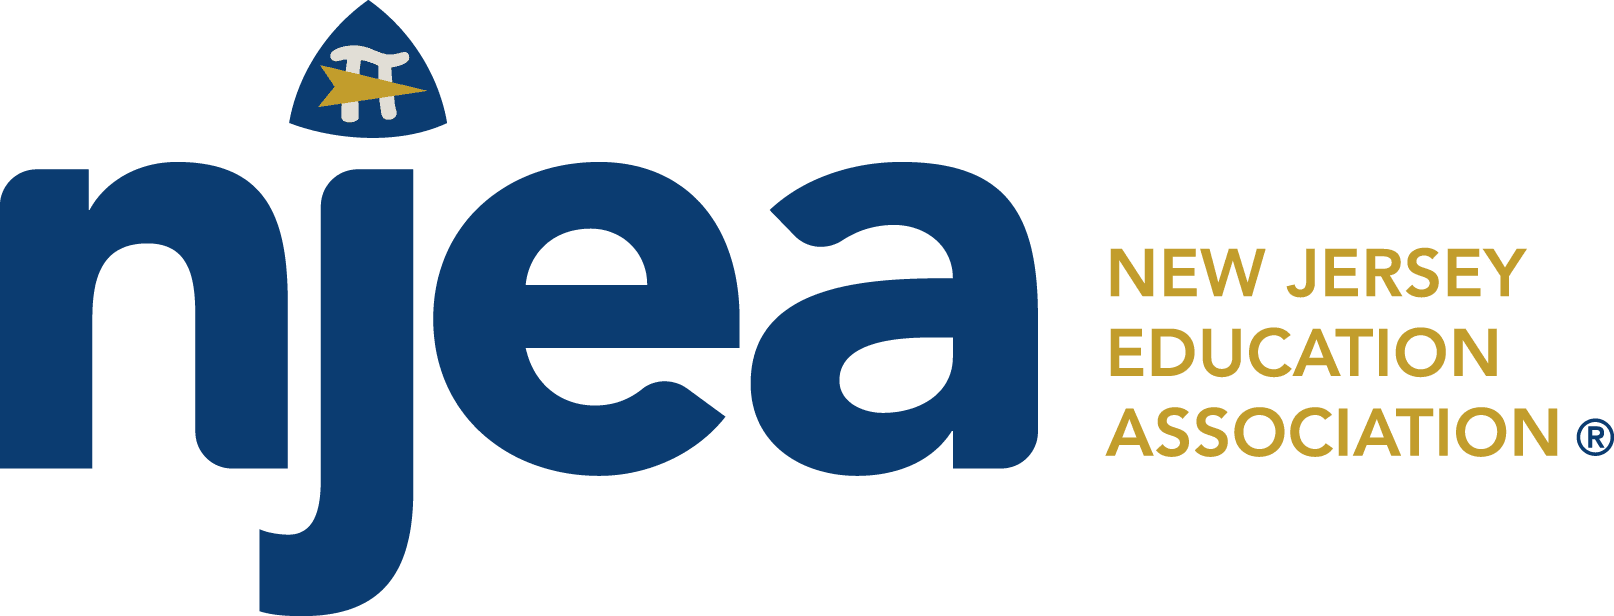 New Jersey Education Association Logo